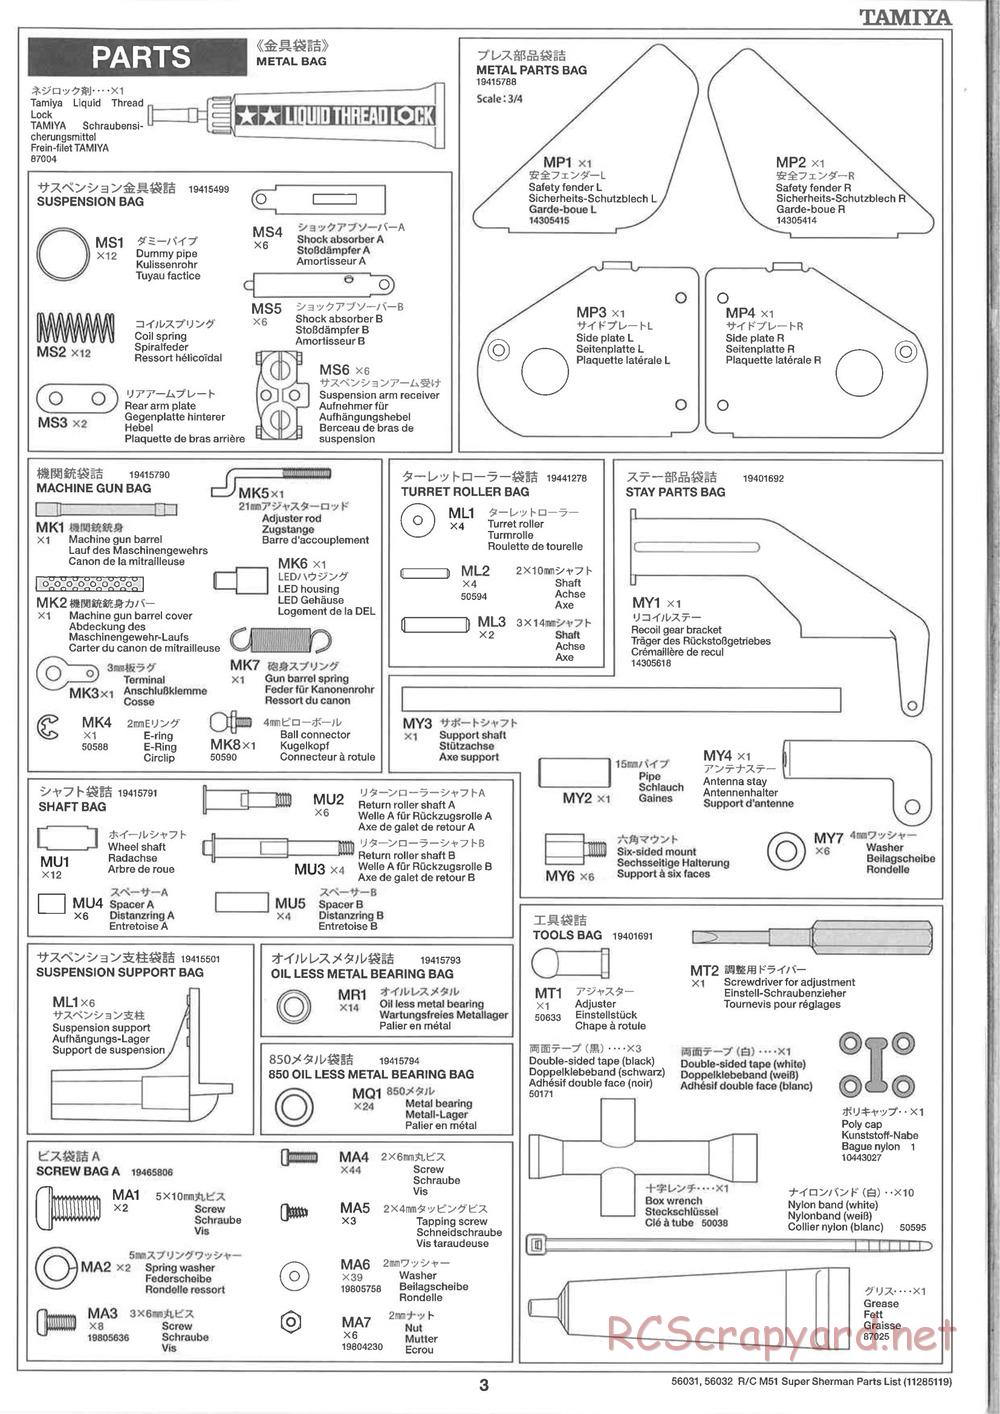 Tamiya - Super Sherman M-51 - 1/16 Scale Chassis - Manual - Page 23